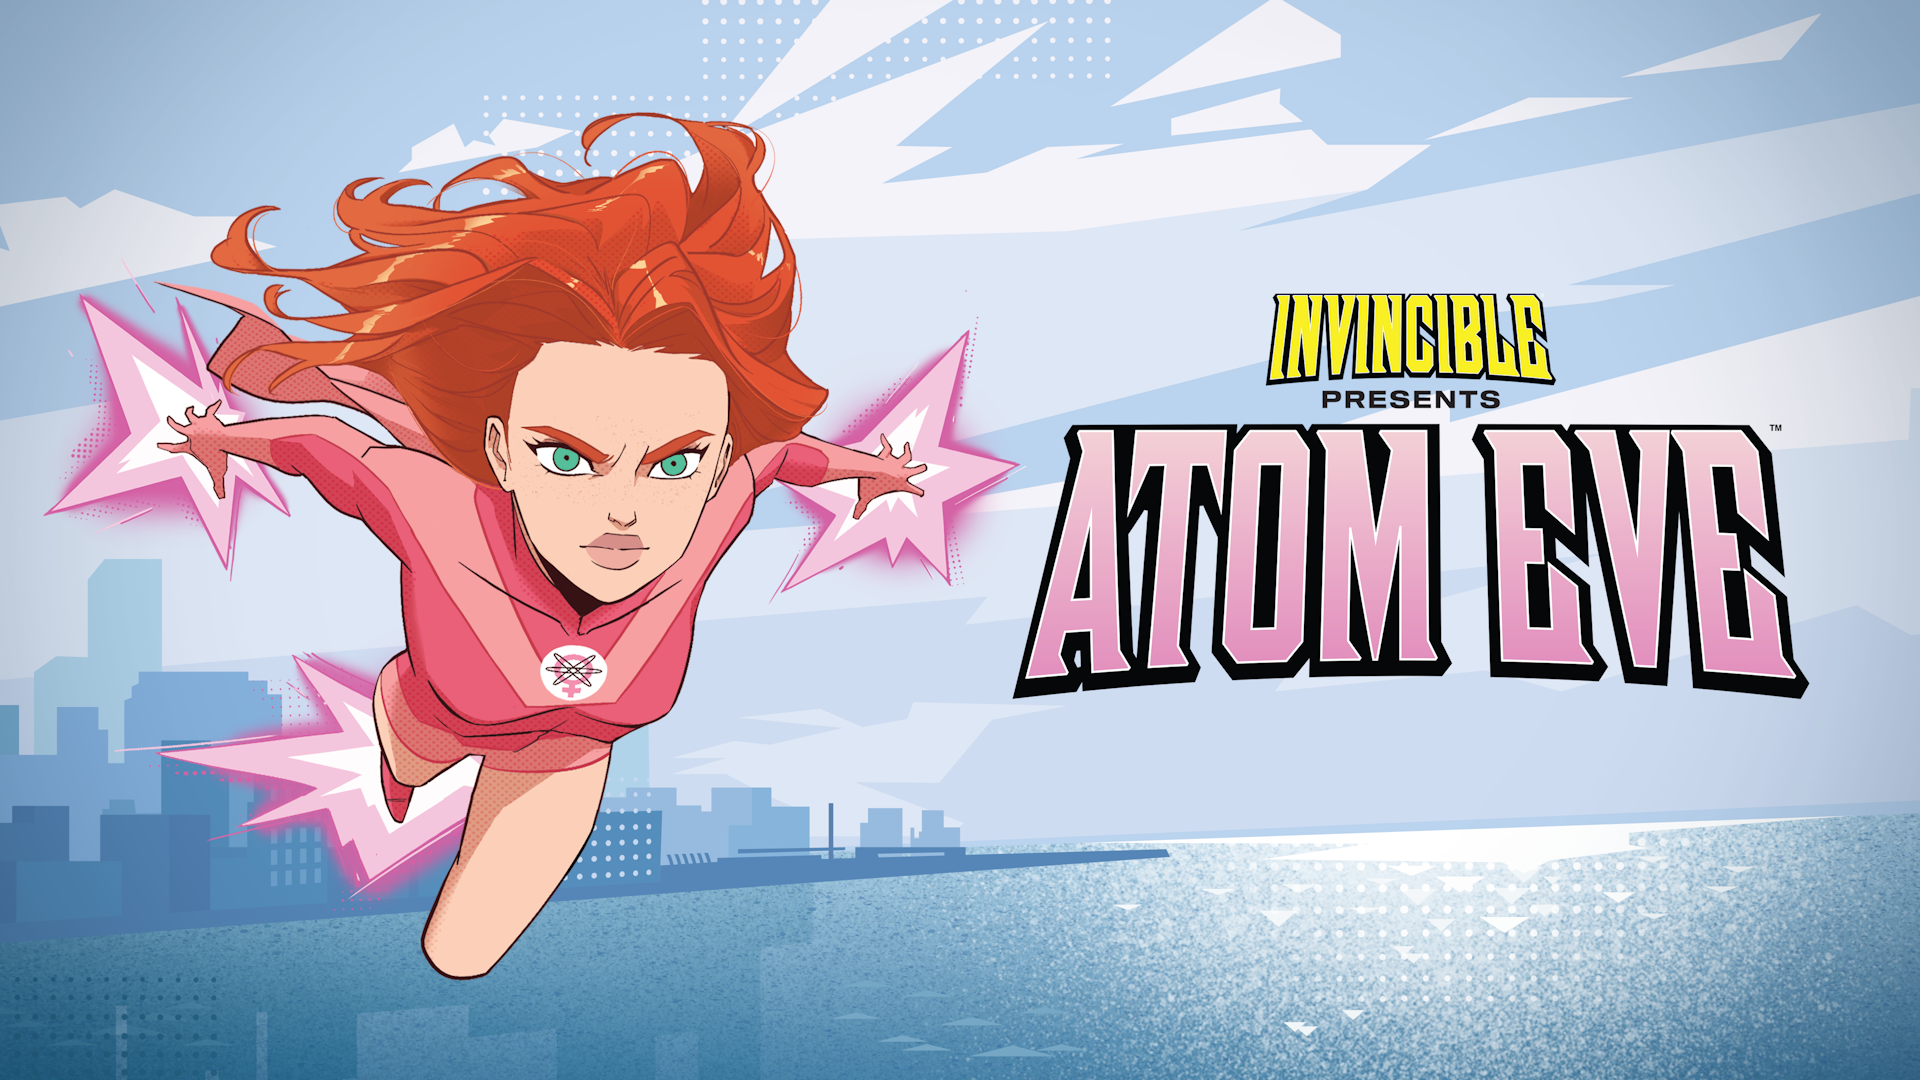 Image clé du jeu vidéo Invincible Presents : Atom Eve